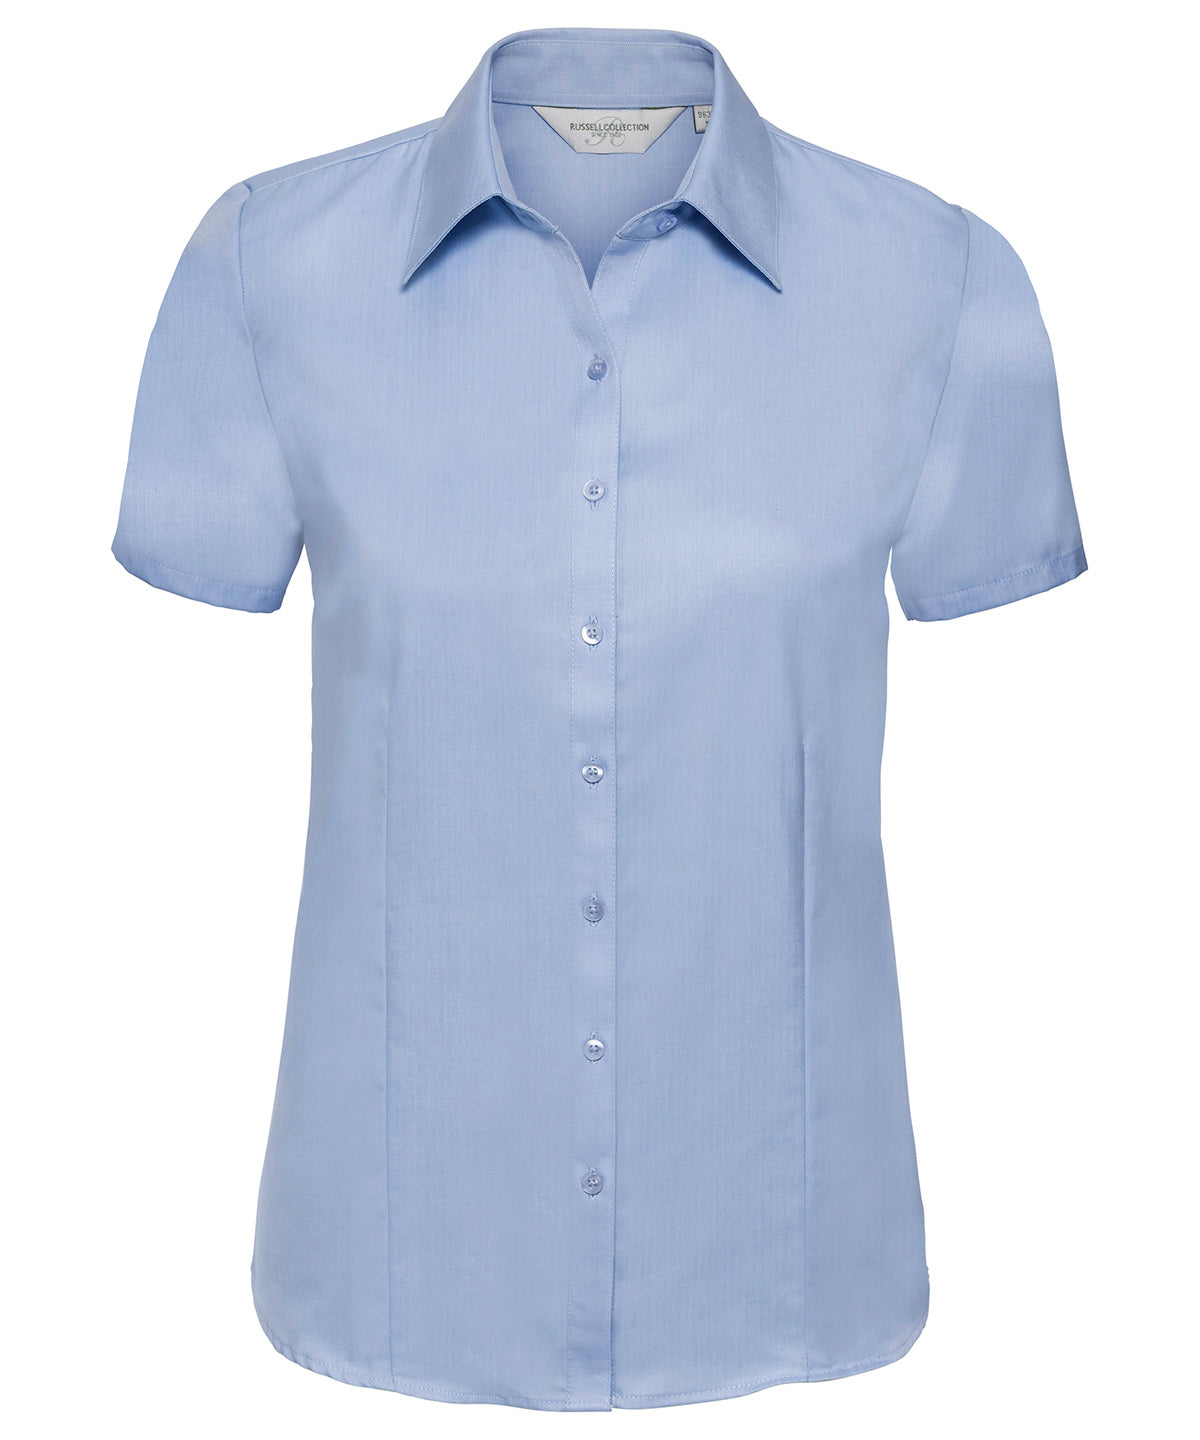 Personalised Shirts - Light Blue Russell Collection Women's short sleeve herringbone shirt